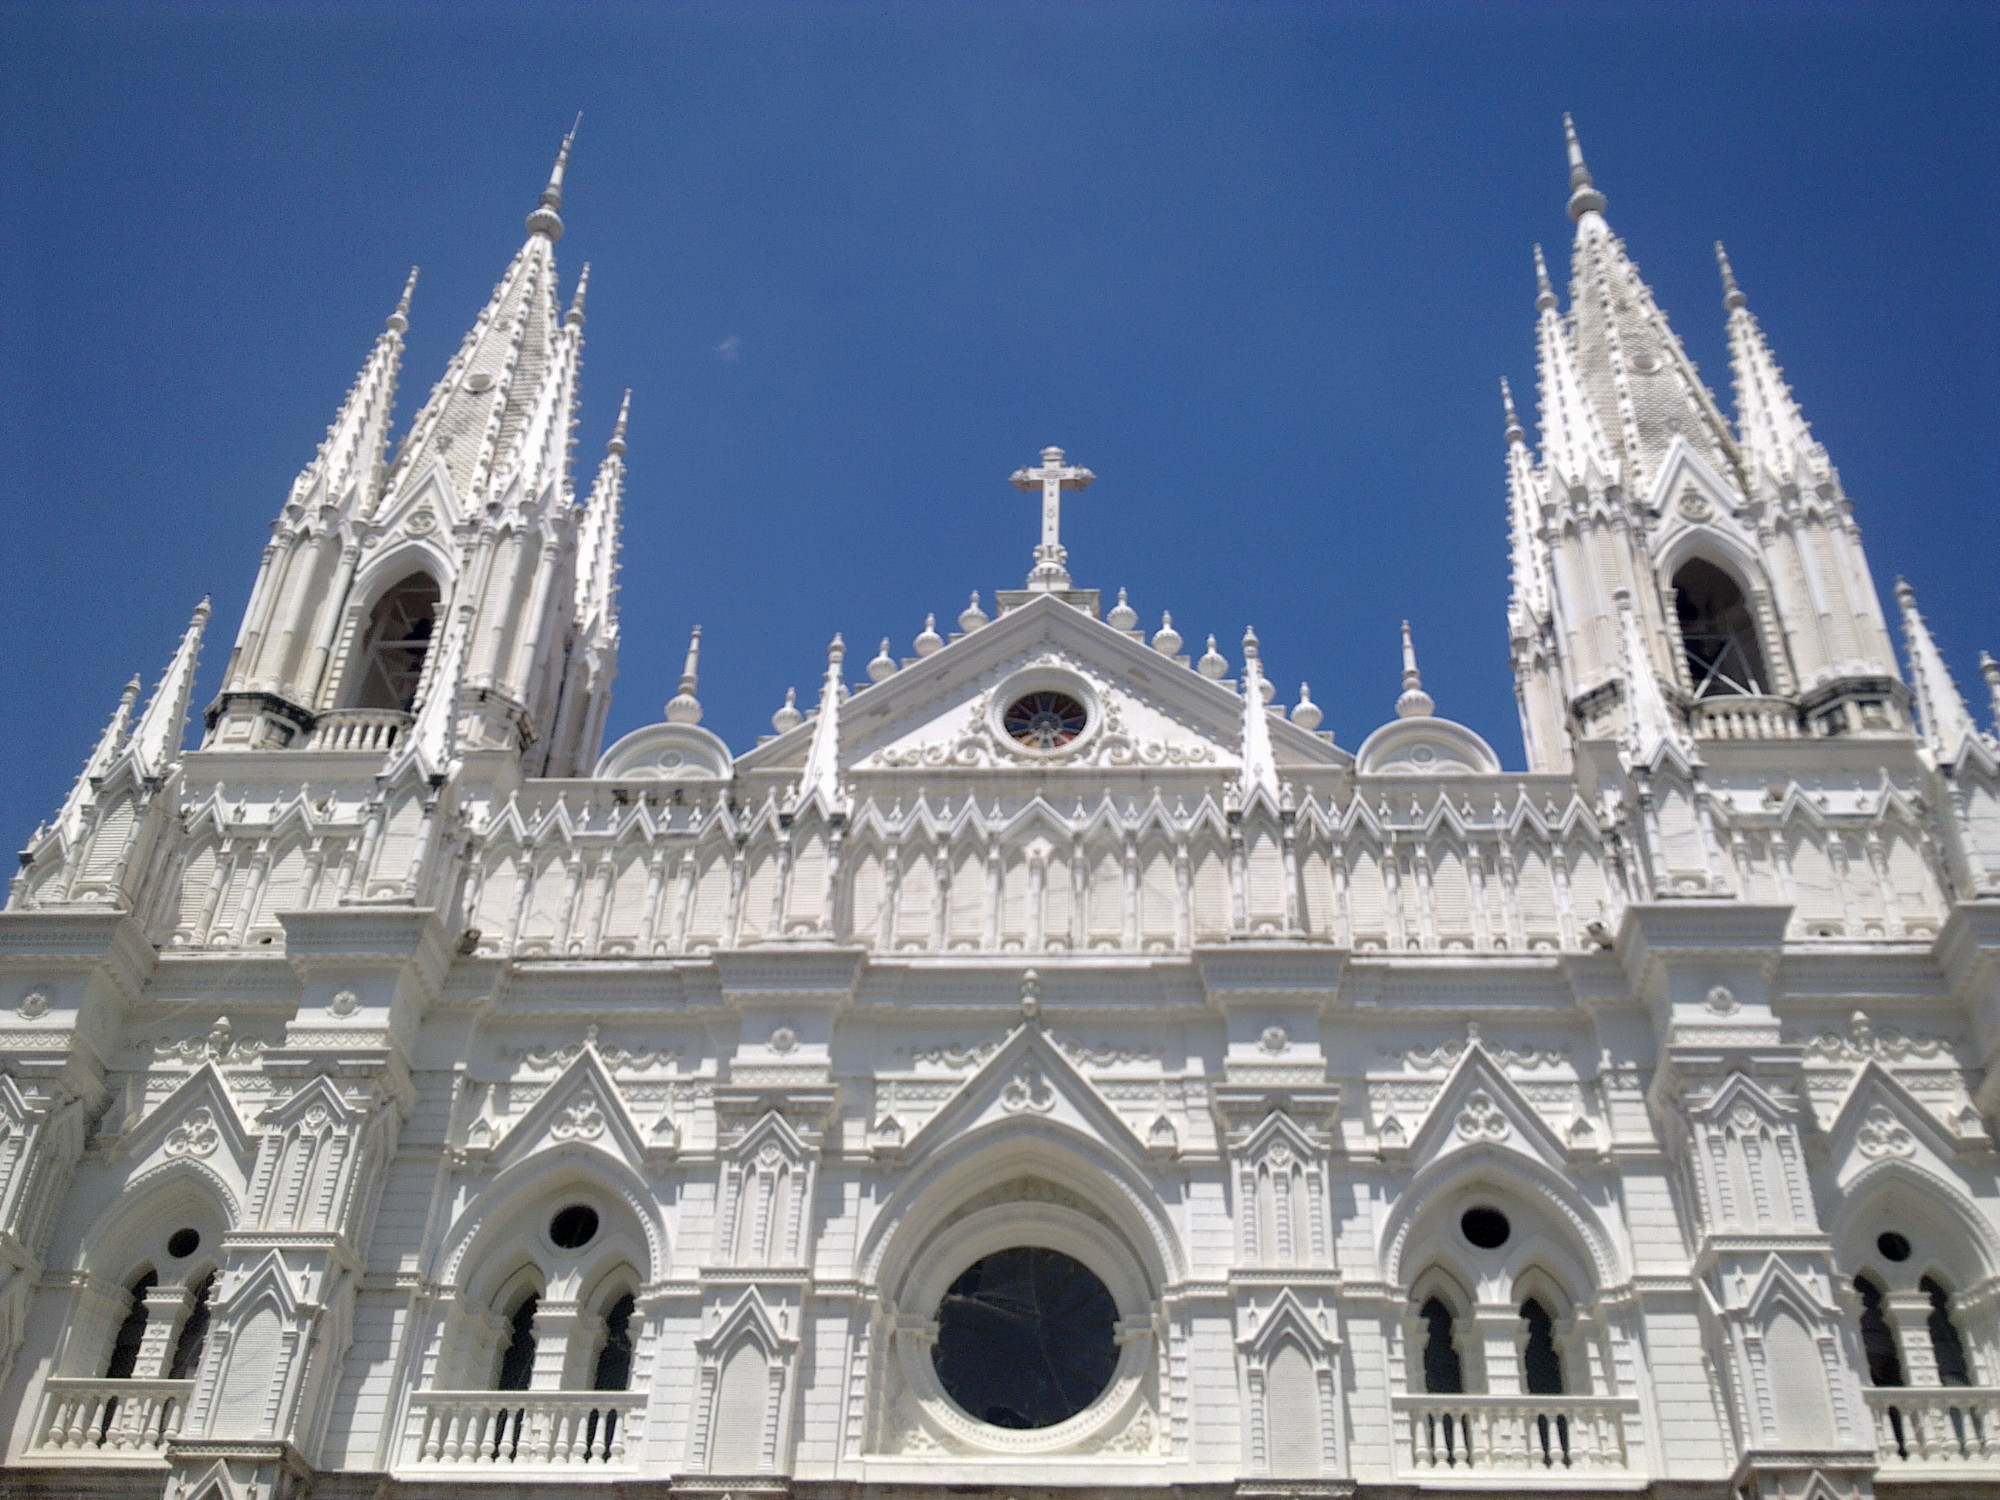 Santa Ana Catedral (El Salvador)